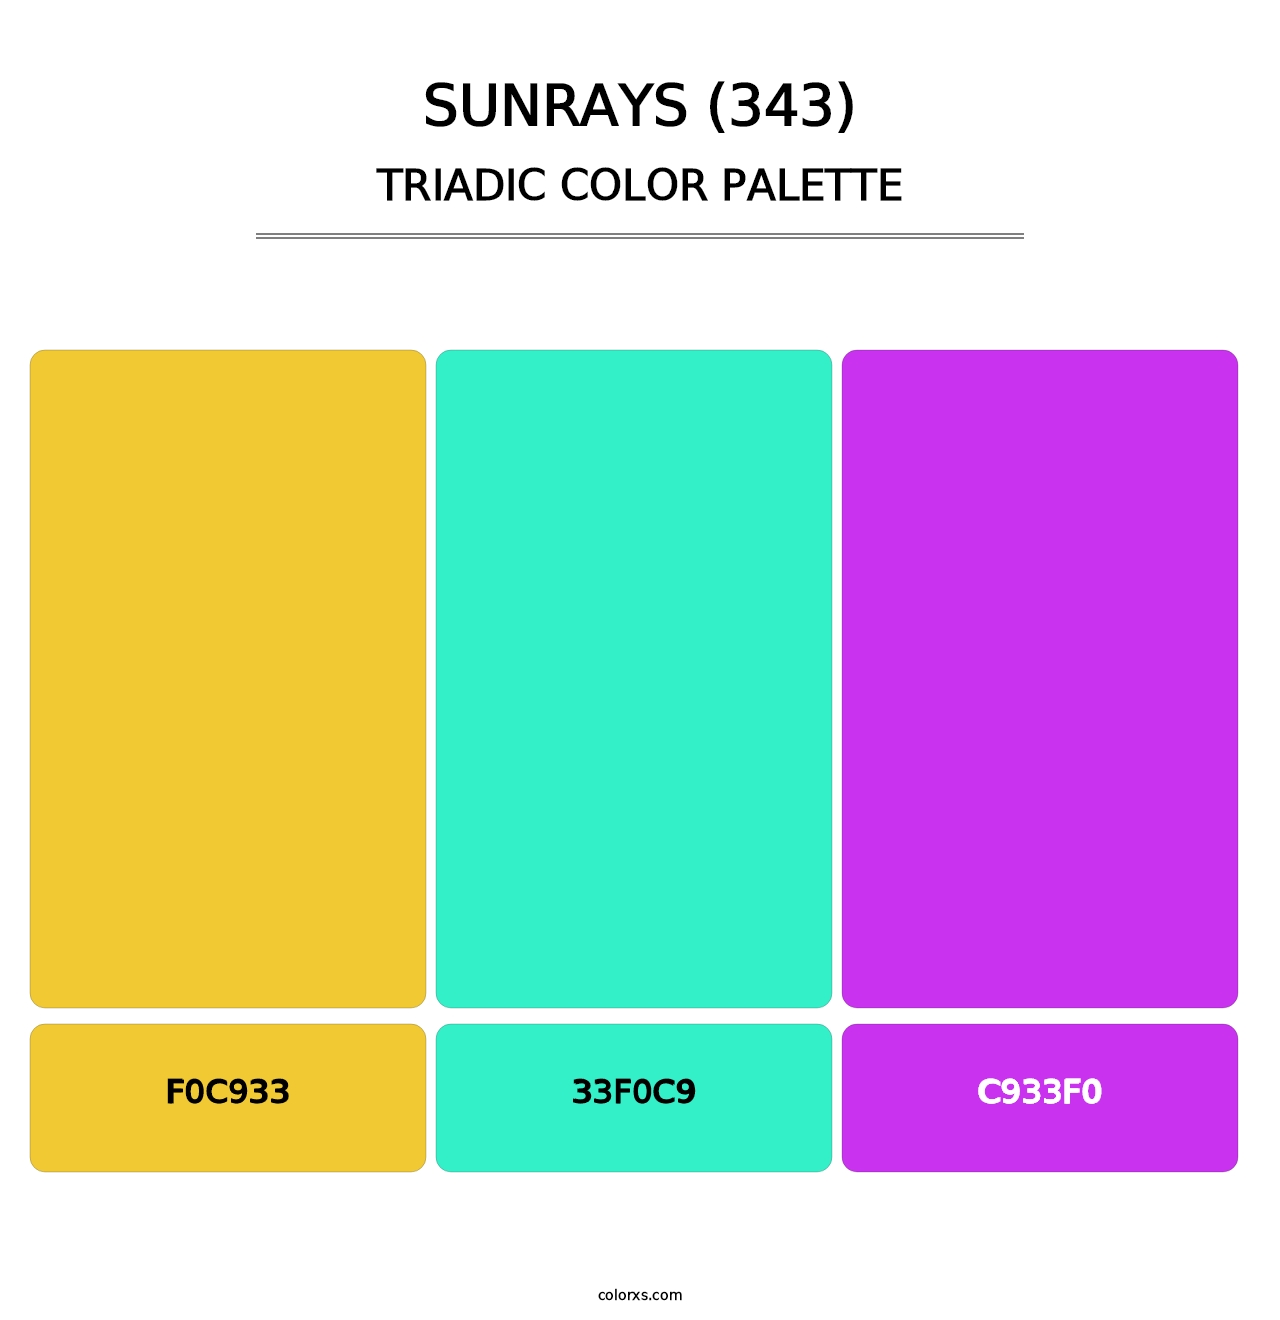 Sunrays (343) - Triadic Color Palette